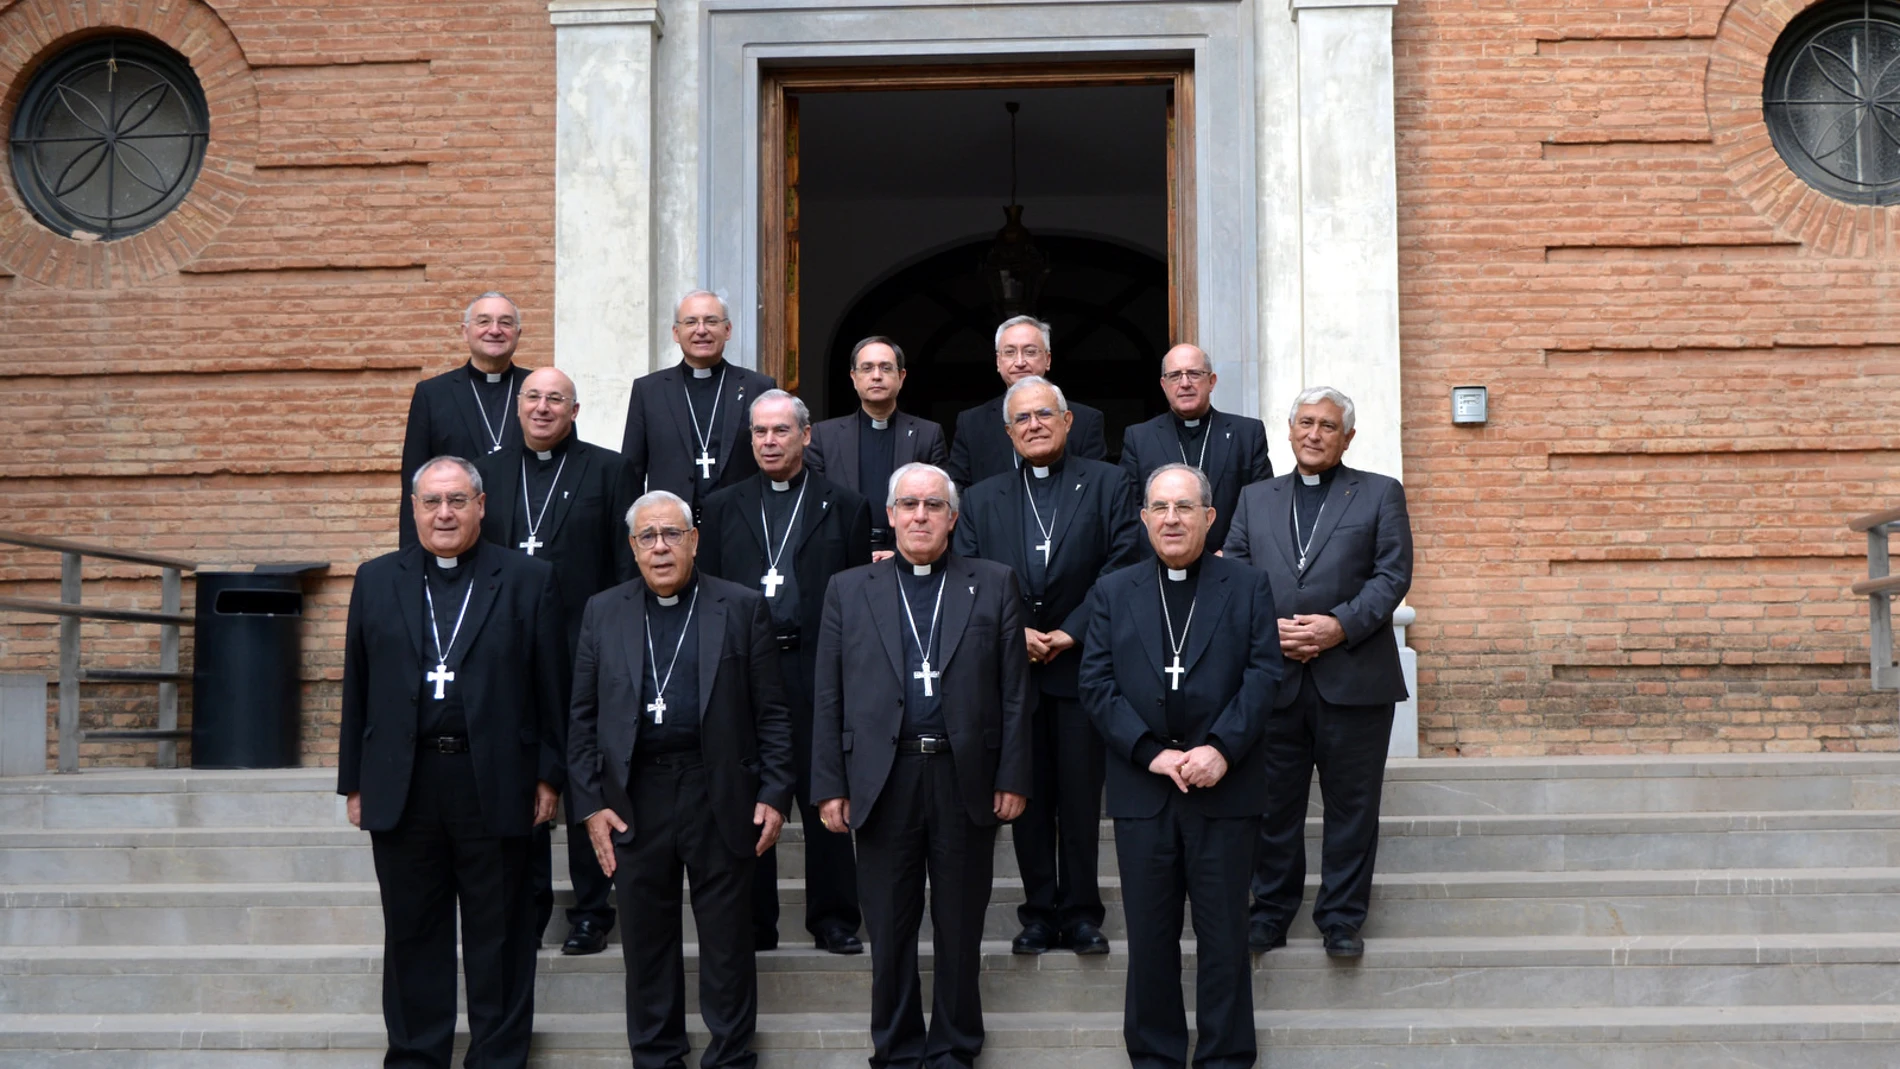 Asamblea de Obispos del Sur de España. ASAMBLEA OBISPOS DEL SUR